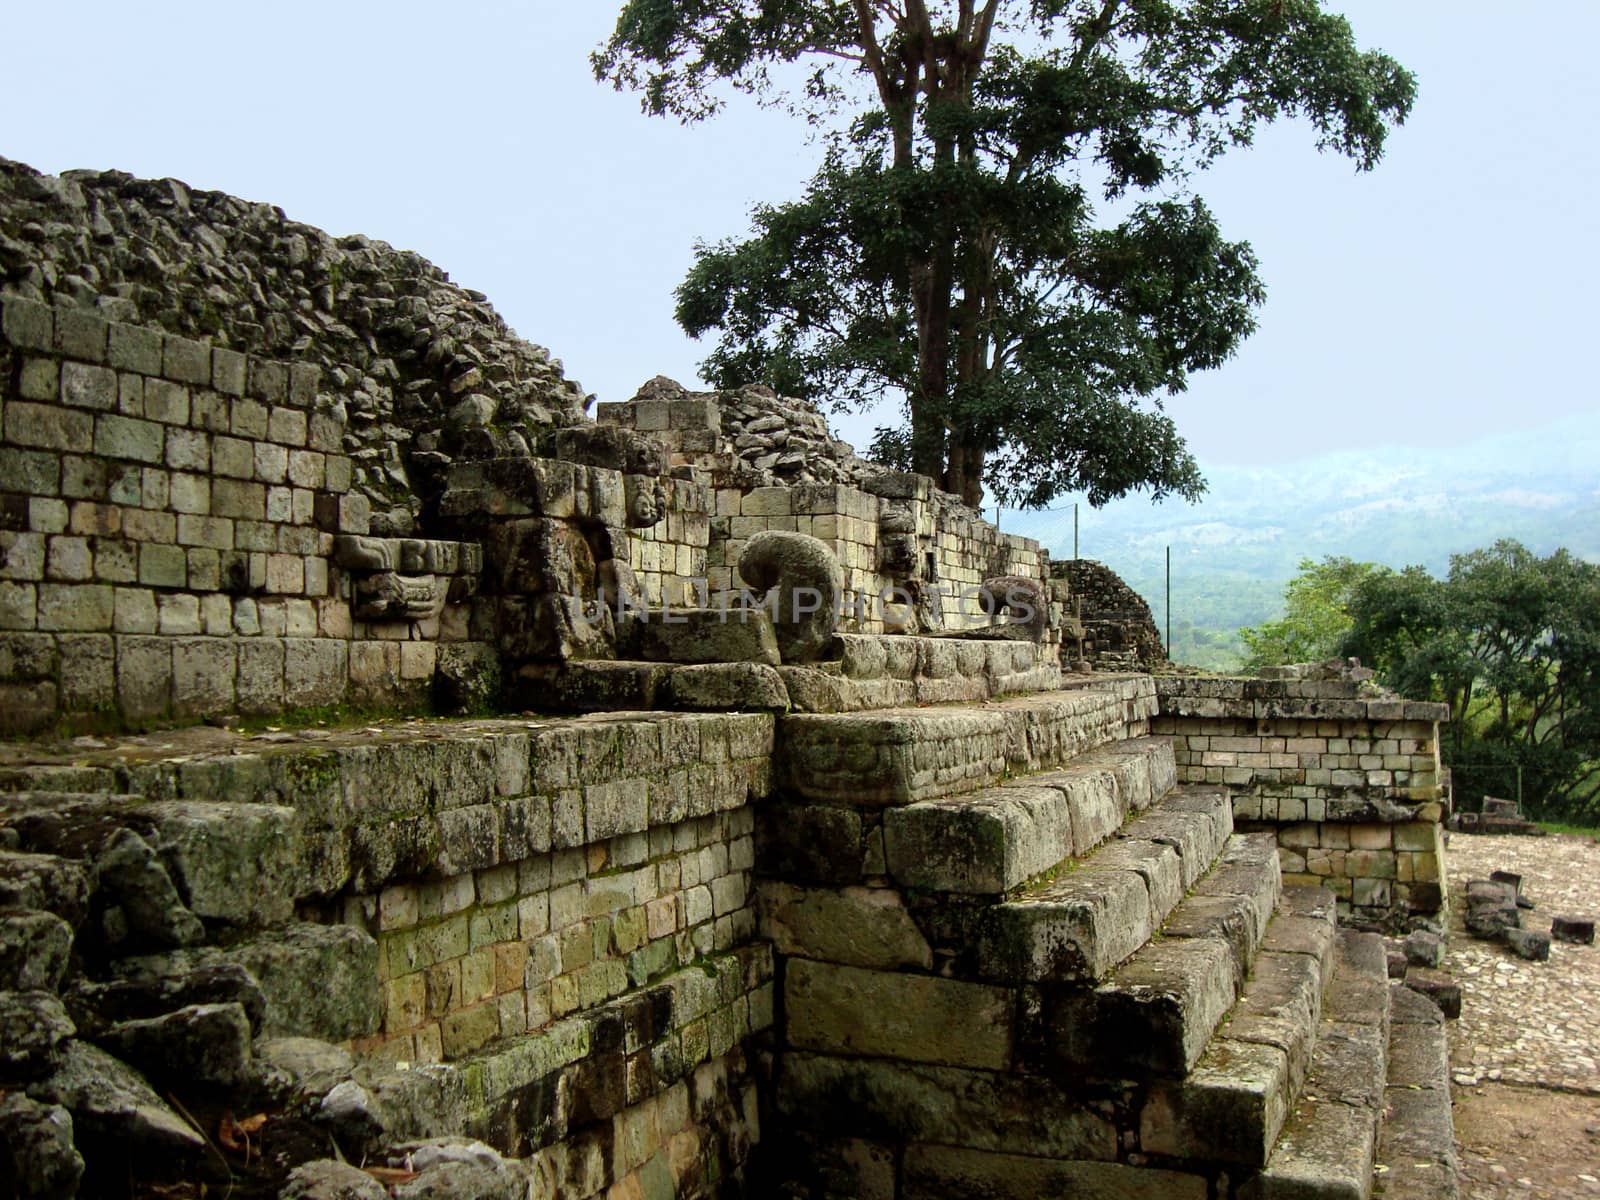 mayan architecture and copan ruins in Honduras by ftlaudgirl